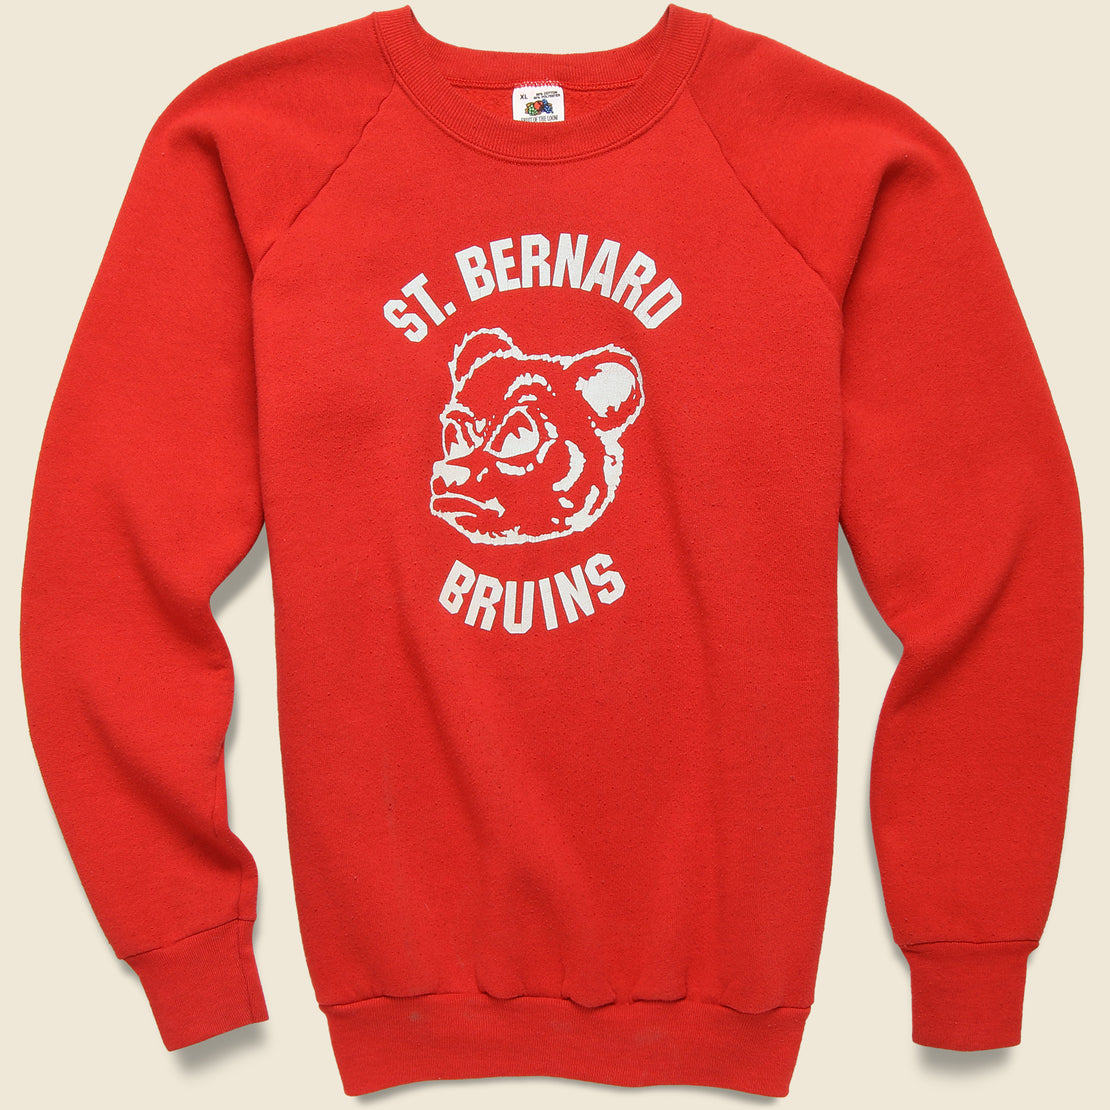 Vintage St. Bernard Bruins Sweatshirt